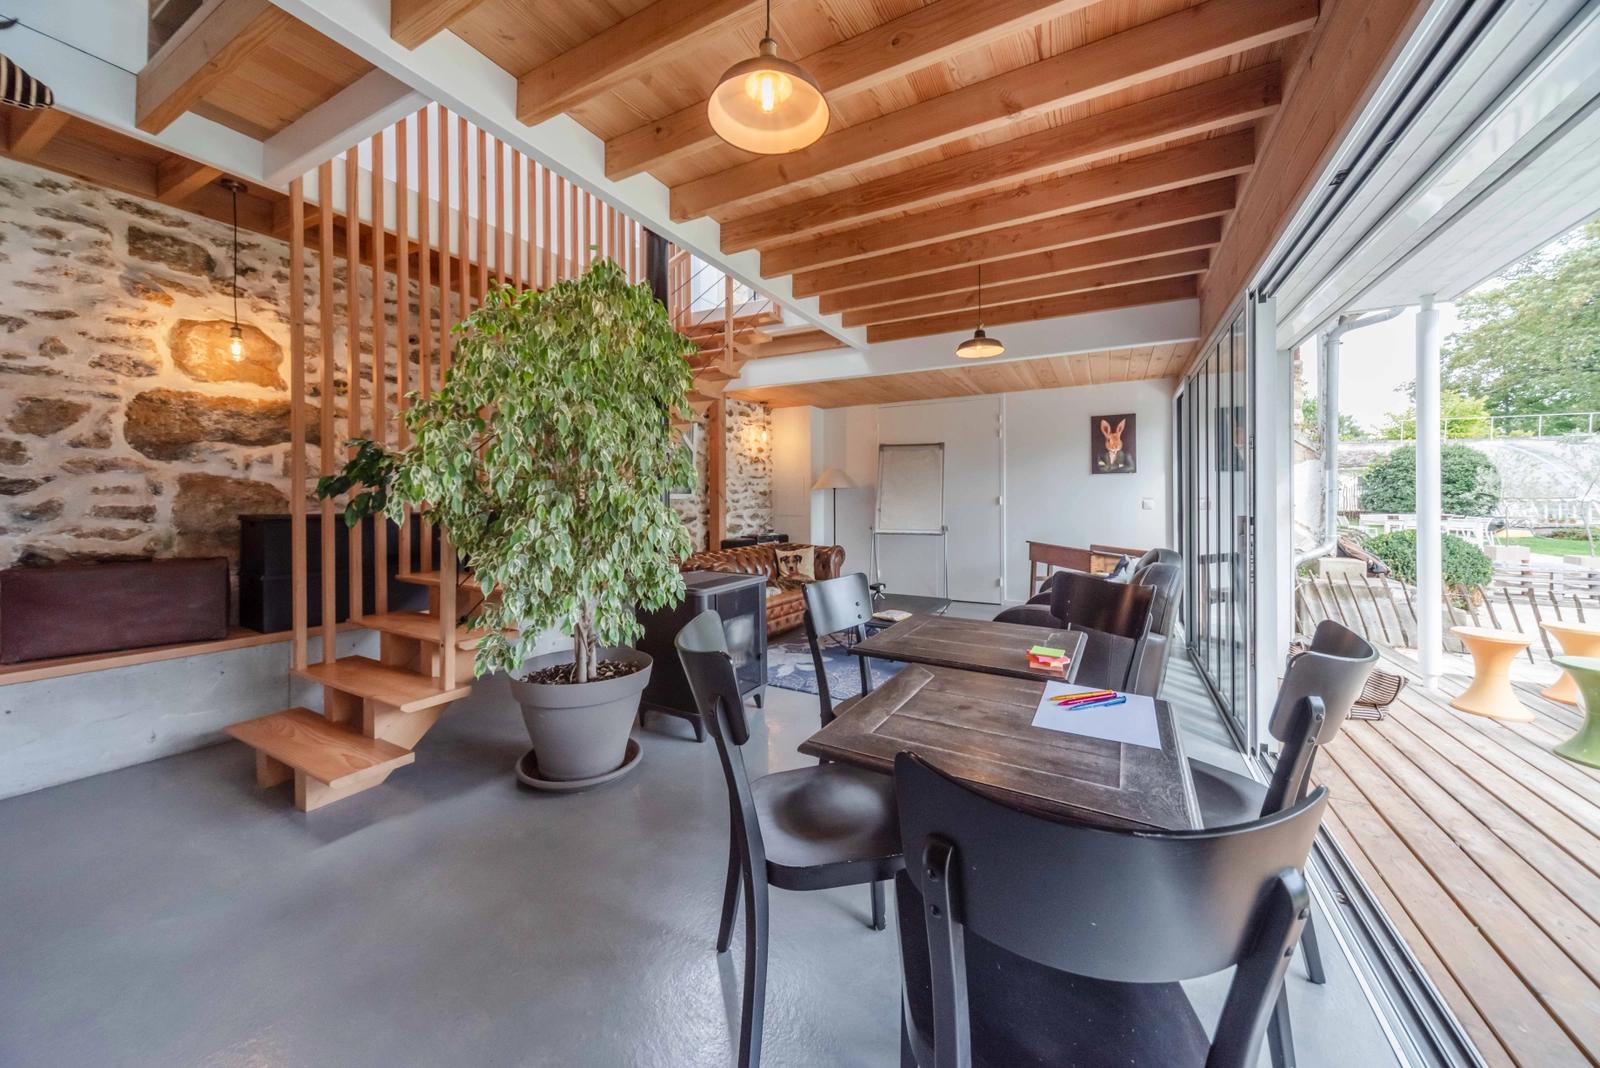 Comedor dentro Casa "loft" de madera diseñada por un arquitecto cerca de París - 1